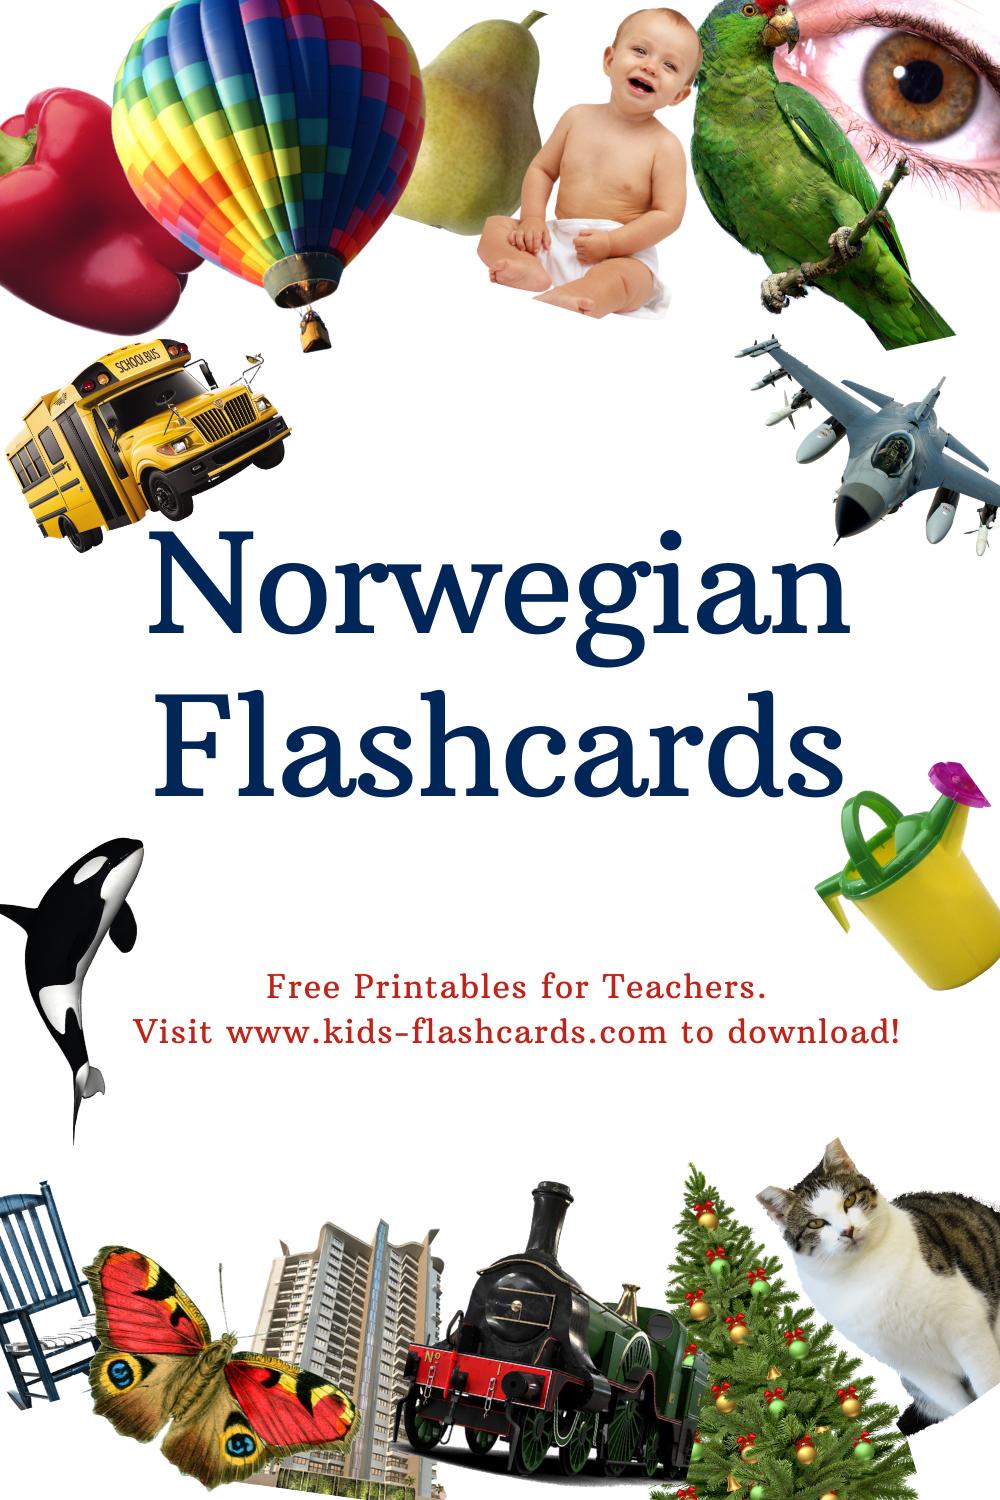 Worksheets to learn Norwegian language